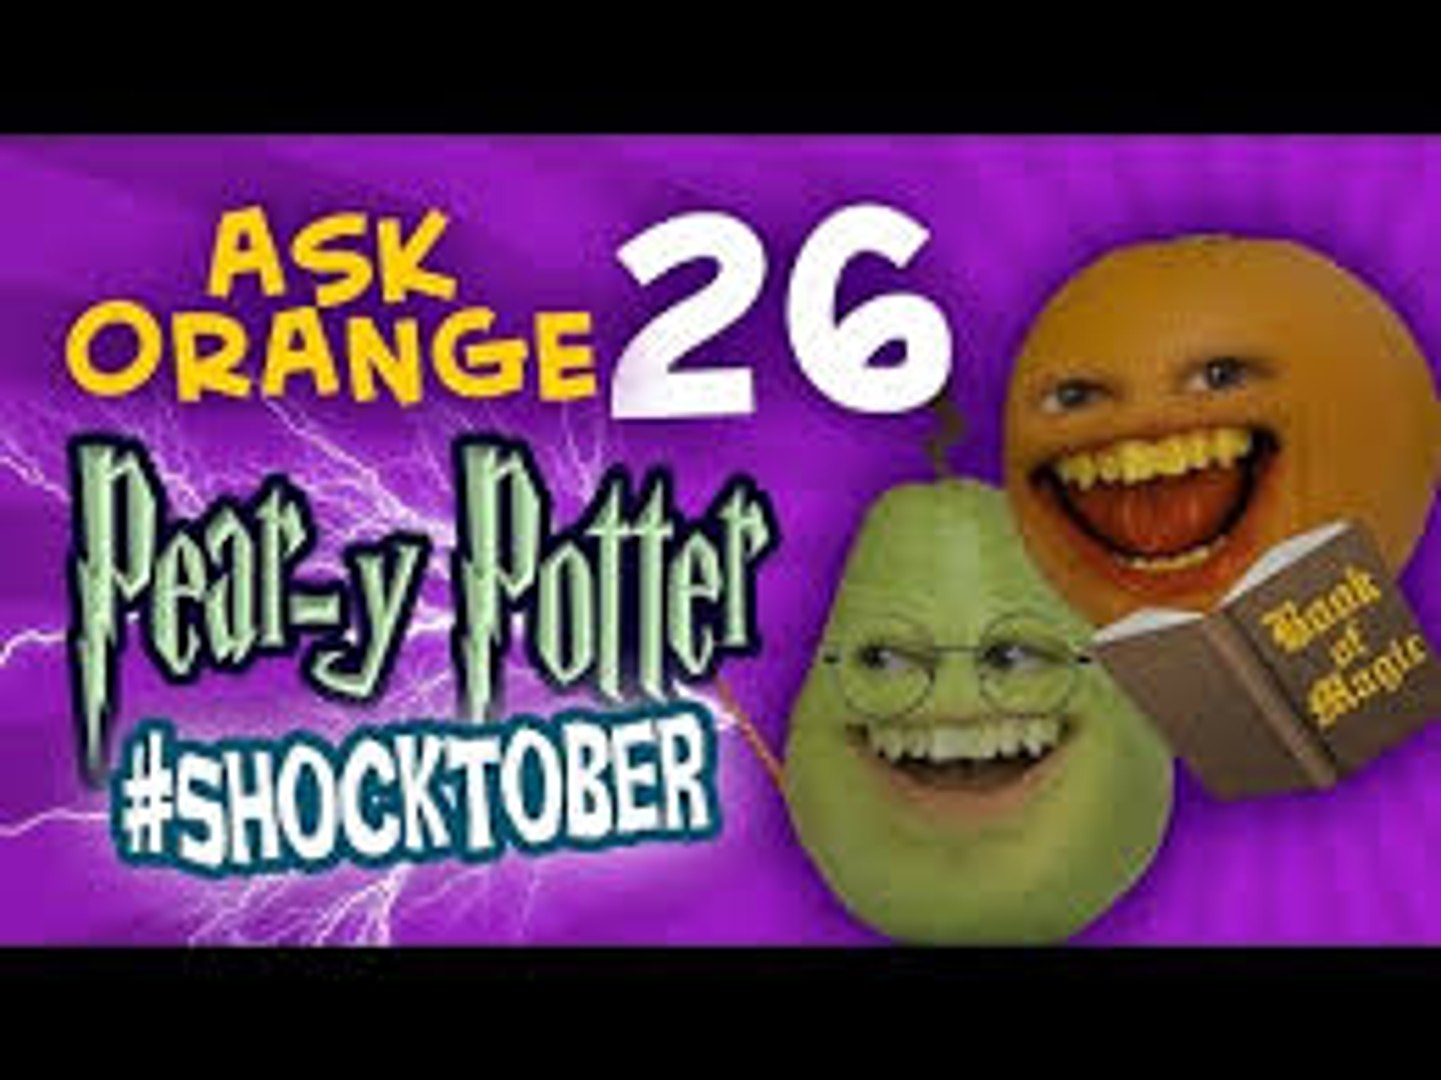 Annoying Orange Ask Orange 26 Pear Y Potter Shocktober - roblox horror mansion deadly spongebob annoying orange plays shocktober